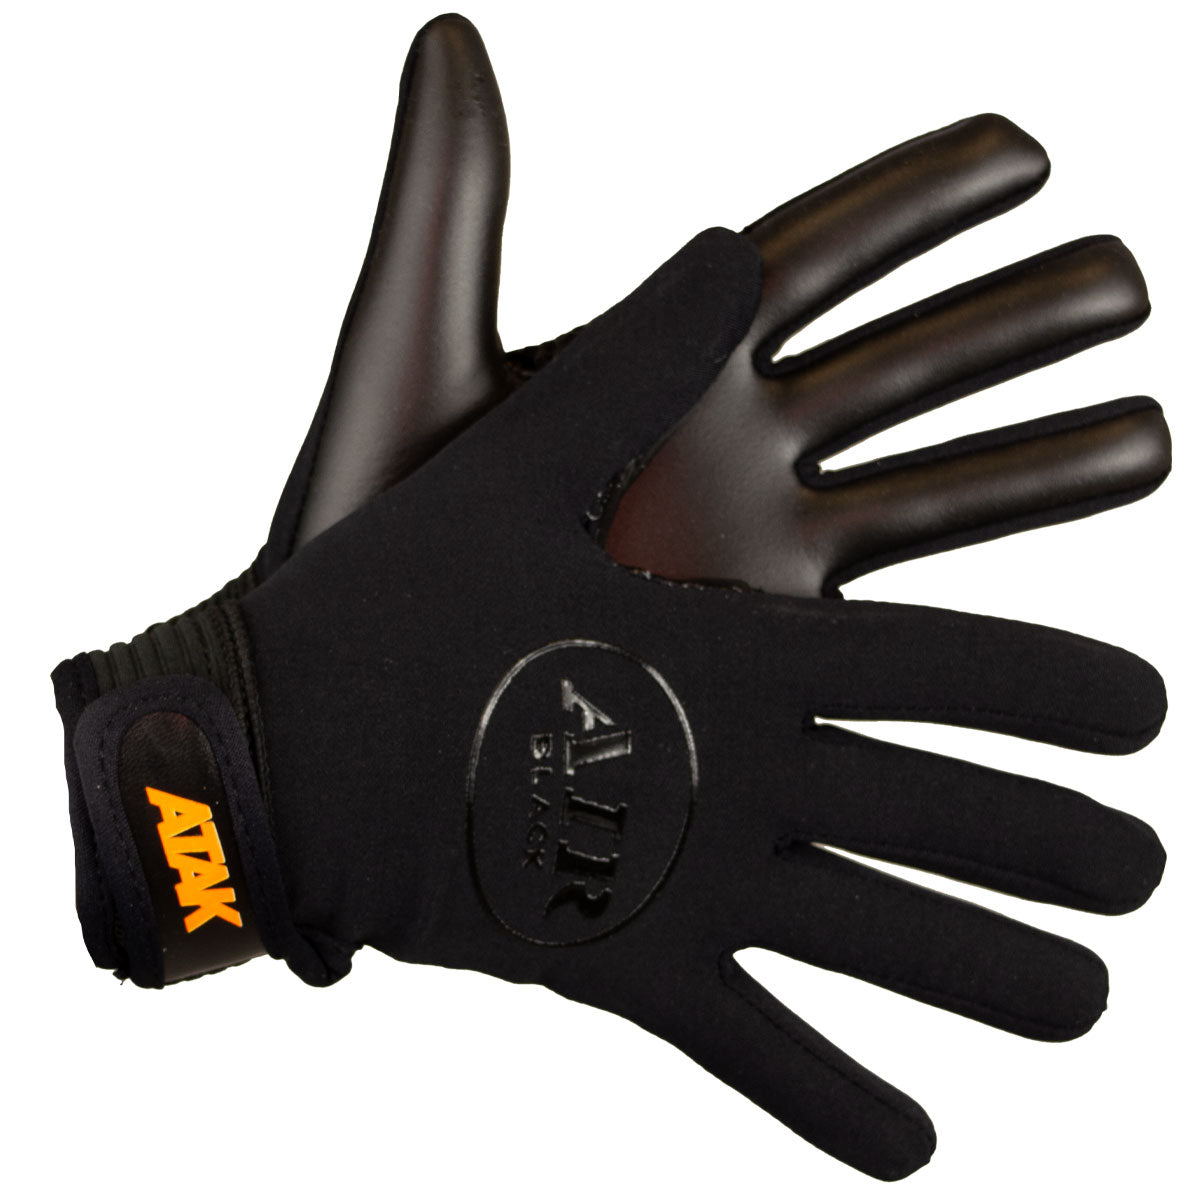 Atak Air Blackout Gaelic Gloves - Adult - Black